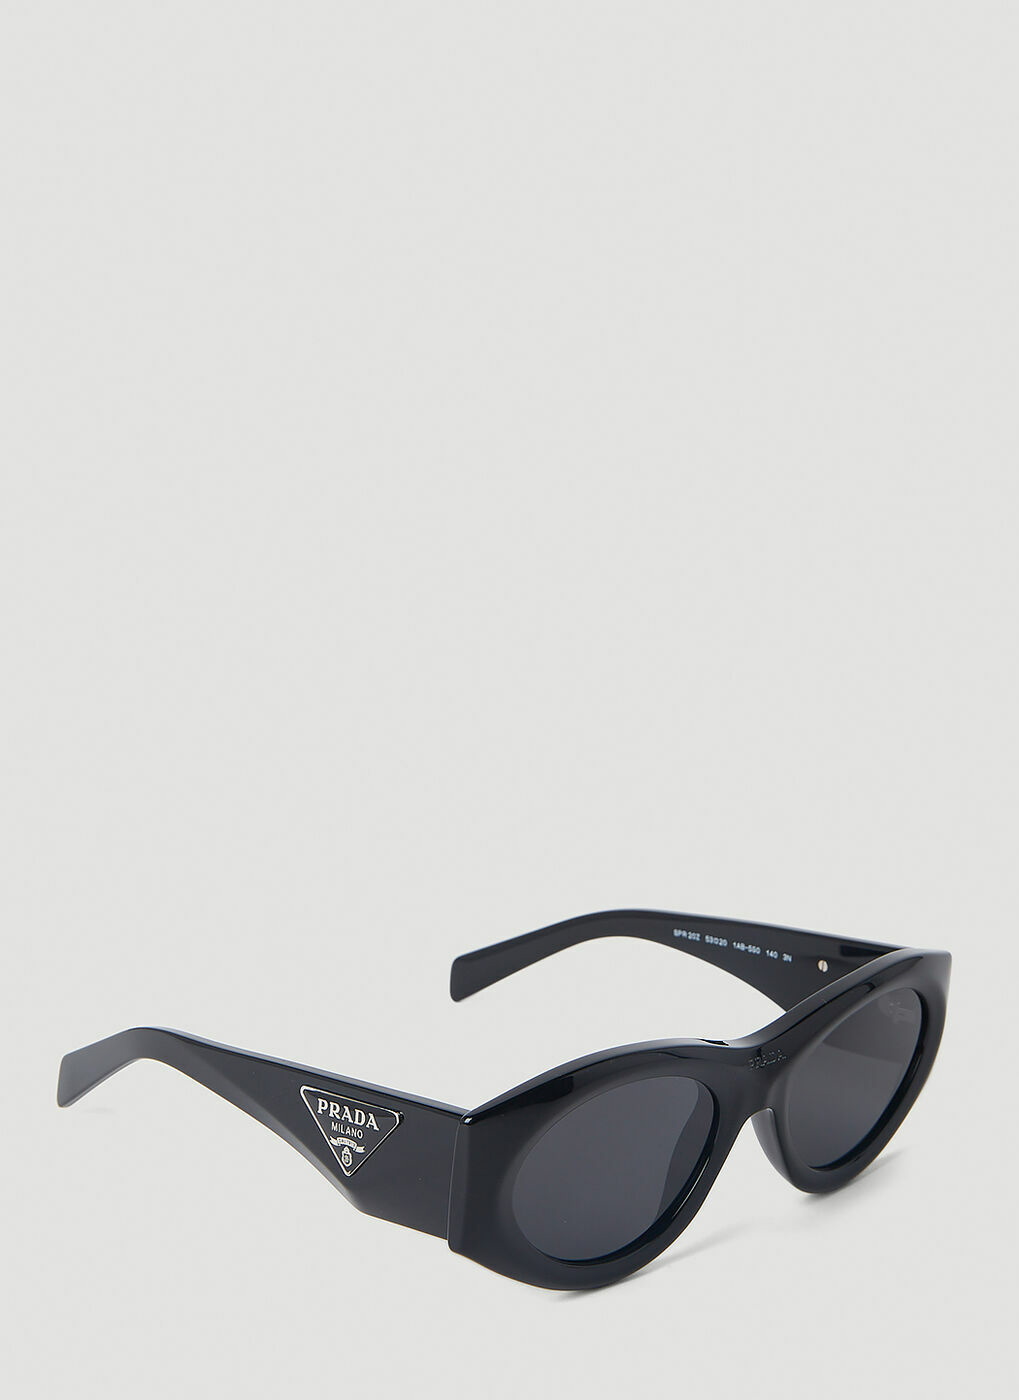 Prada PR 20VS MILLENIALS Sunglasses | FREE Shipping - SOLD OUT